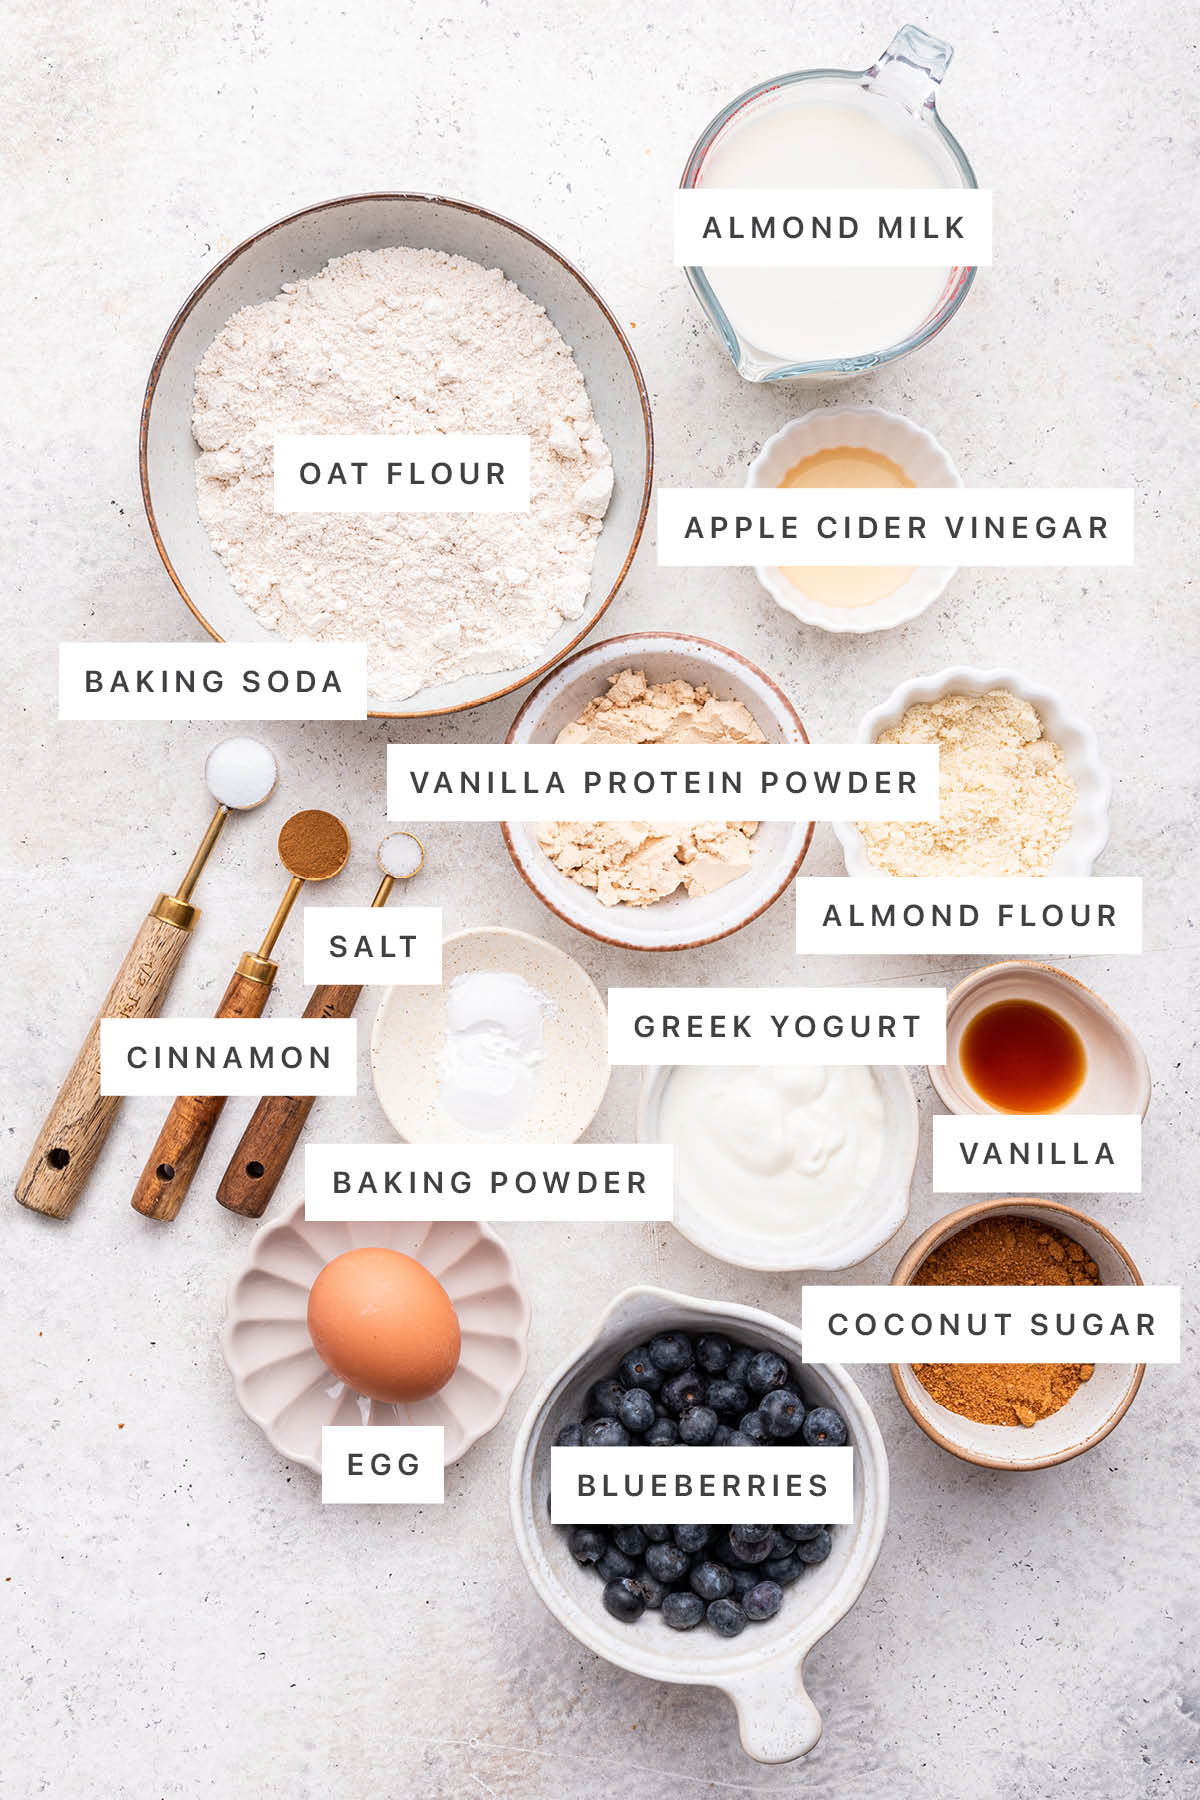 Ingredients measured out to make Blueberry Protein Muffins: oat flour, almond milk, apple cider vinegar, baking soda, vanilla protein powder, salt, almond flour, cinnamon, Greek yogurt, baking powder, vanilla, egg, blueberries and coconut sugar.